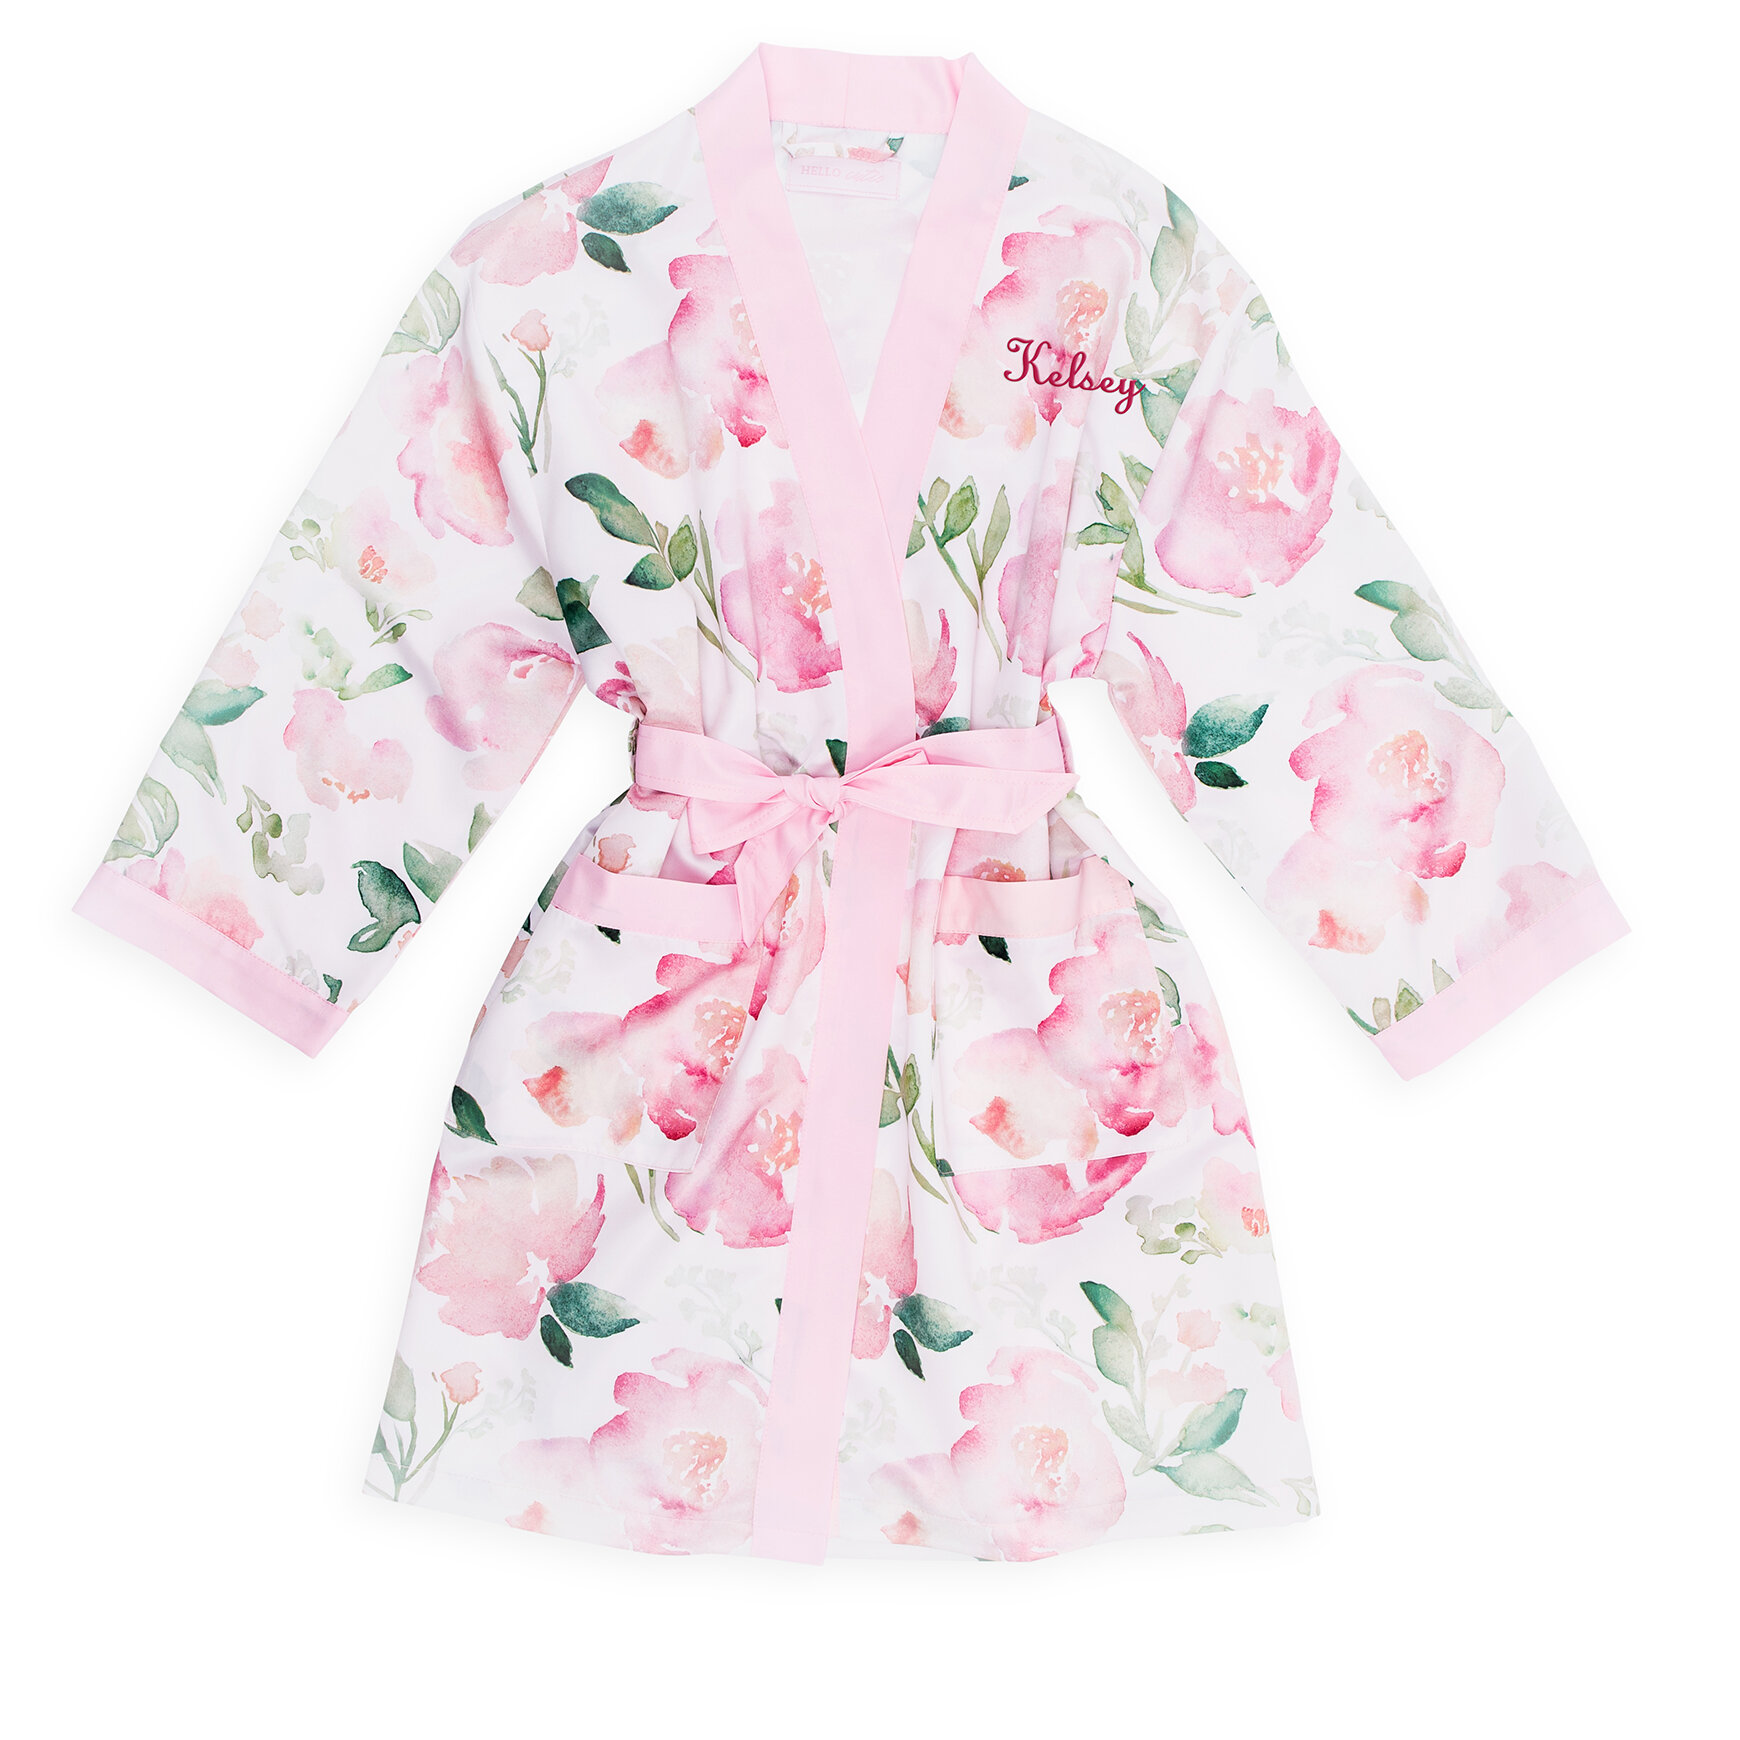 KIDS Personalized Satin Robe|Flower Girl Robe|Satin Pink Robe|Spa Birthday Robe|Embroidered Name|Kimono Kids Robe|Girls Light Pink Pool Robe Clothing Unisex Kids Clothing Pyjamas & Robes Robes 